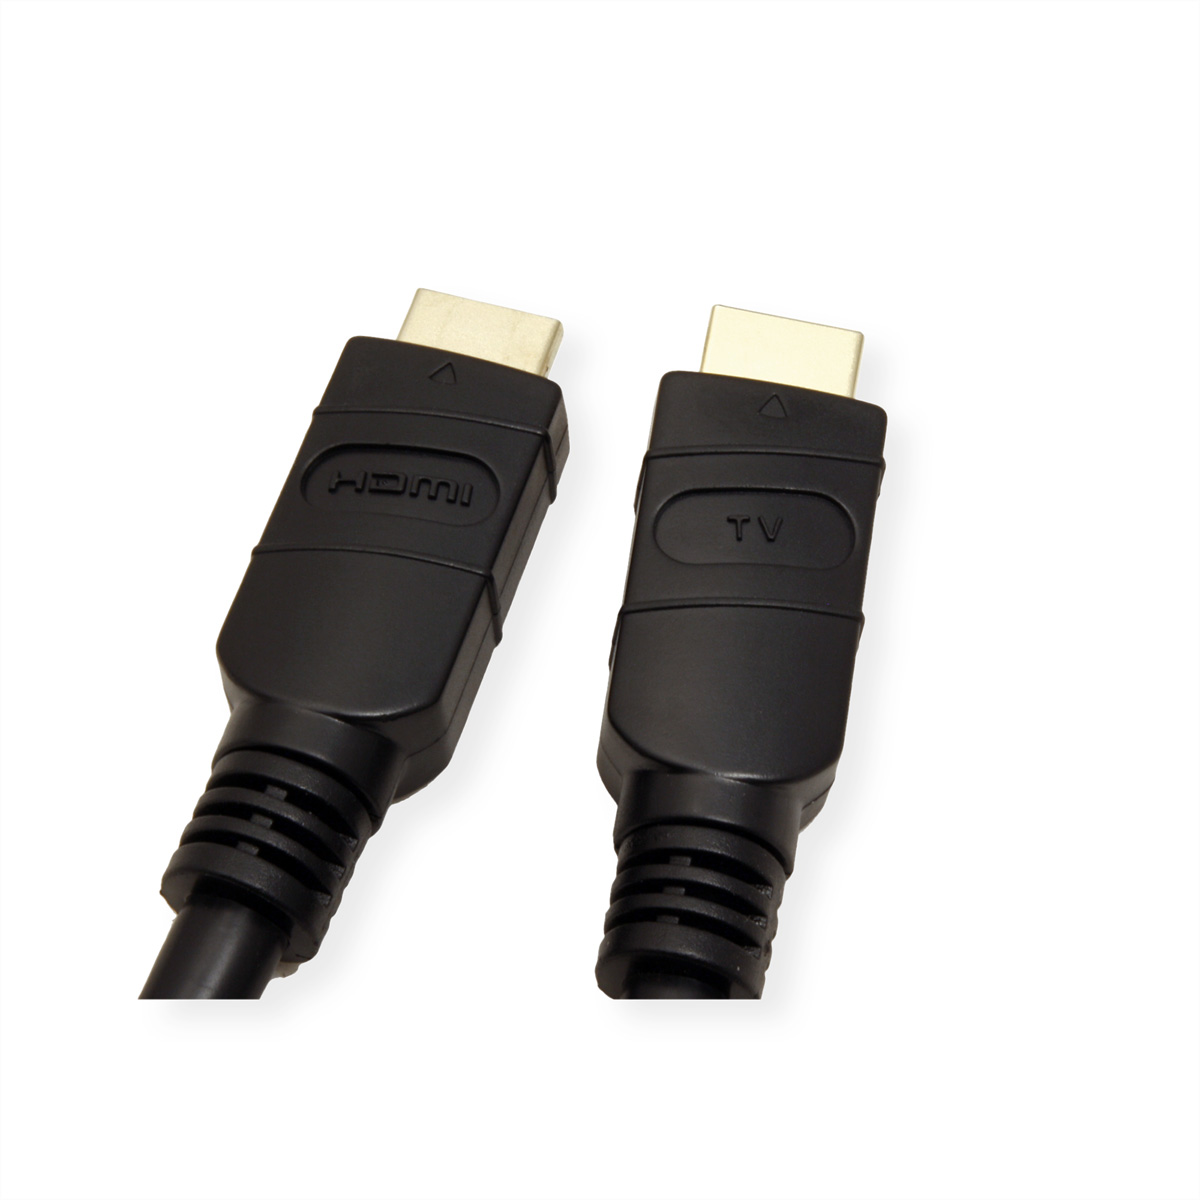 HDMI mit Ultra Ethernet Kabel mit 4K HD VALUE HDMI Repeater Kabel UHD